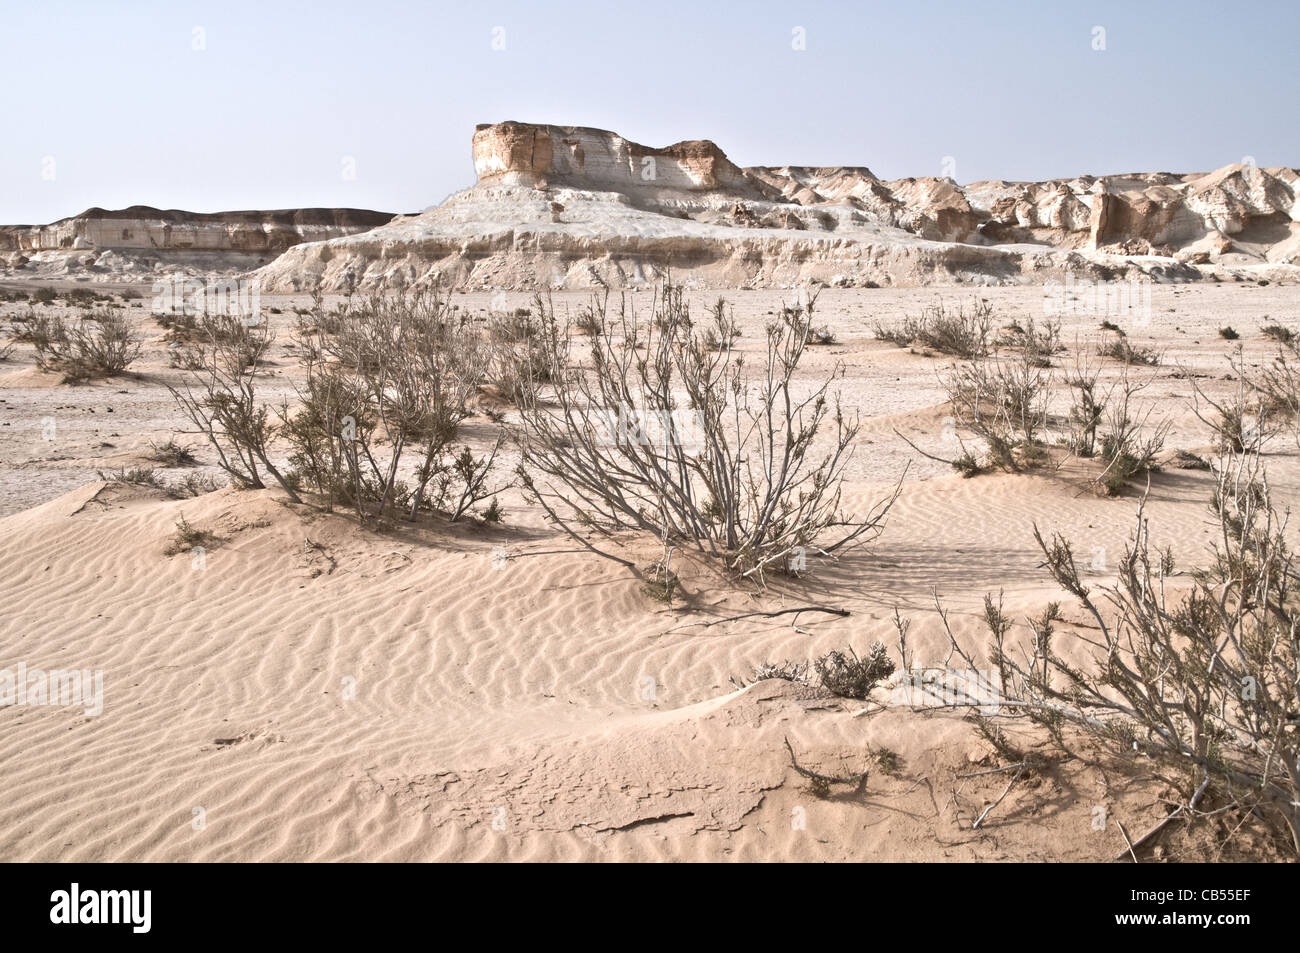 A sandy desert plateau and dry vegetation in the eastern desert of the Badia, Wadi Dahek, Hashemite Kingdom of Jordan. Stock Photo